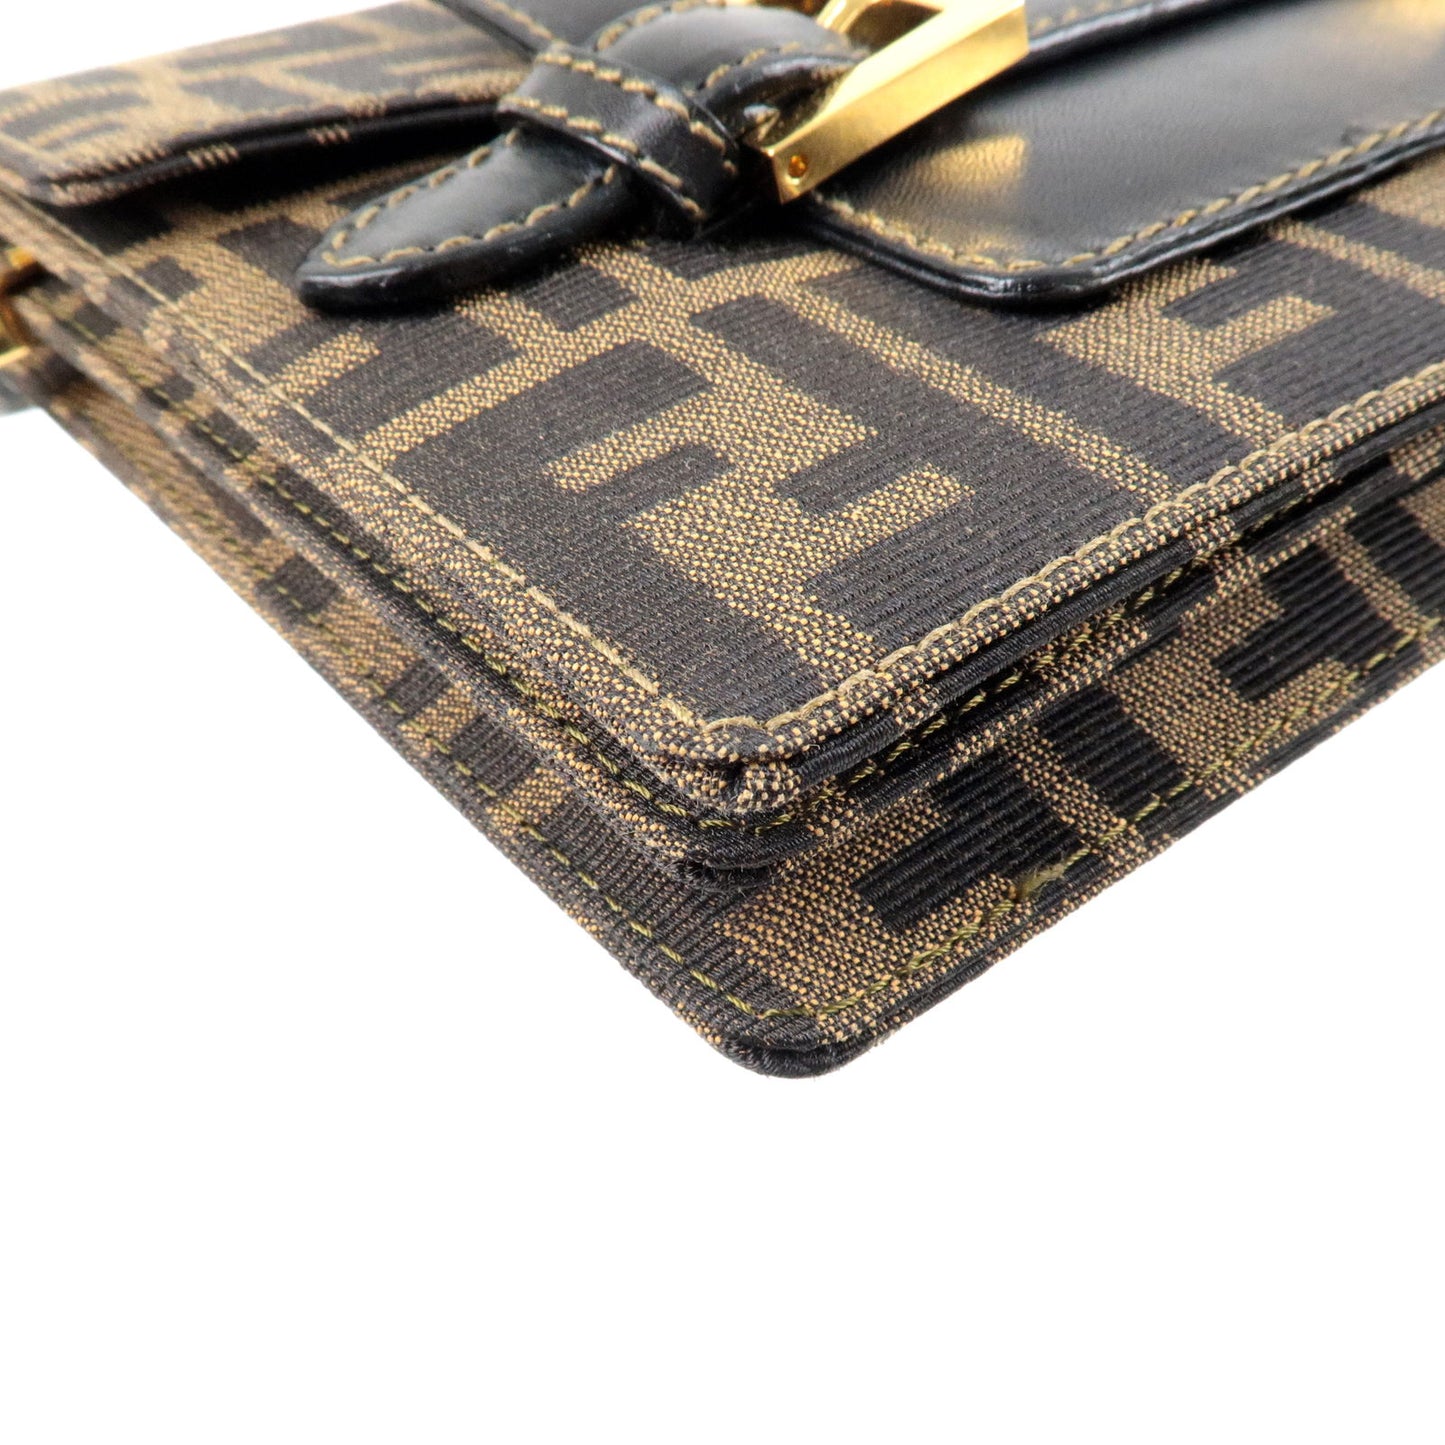 FENDI Zucca Canvas Leather Crossbody Bag Khaki Black 15079